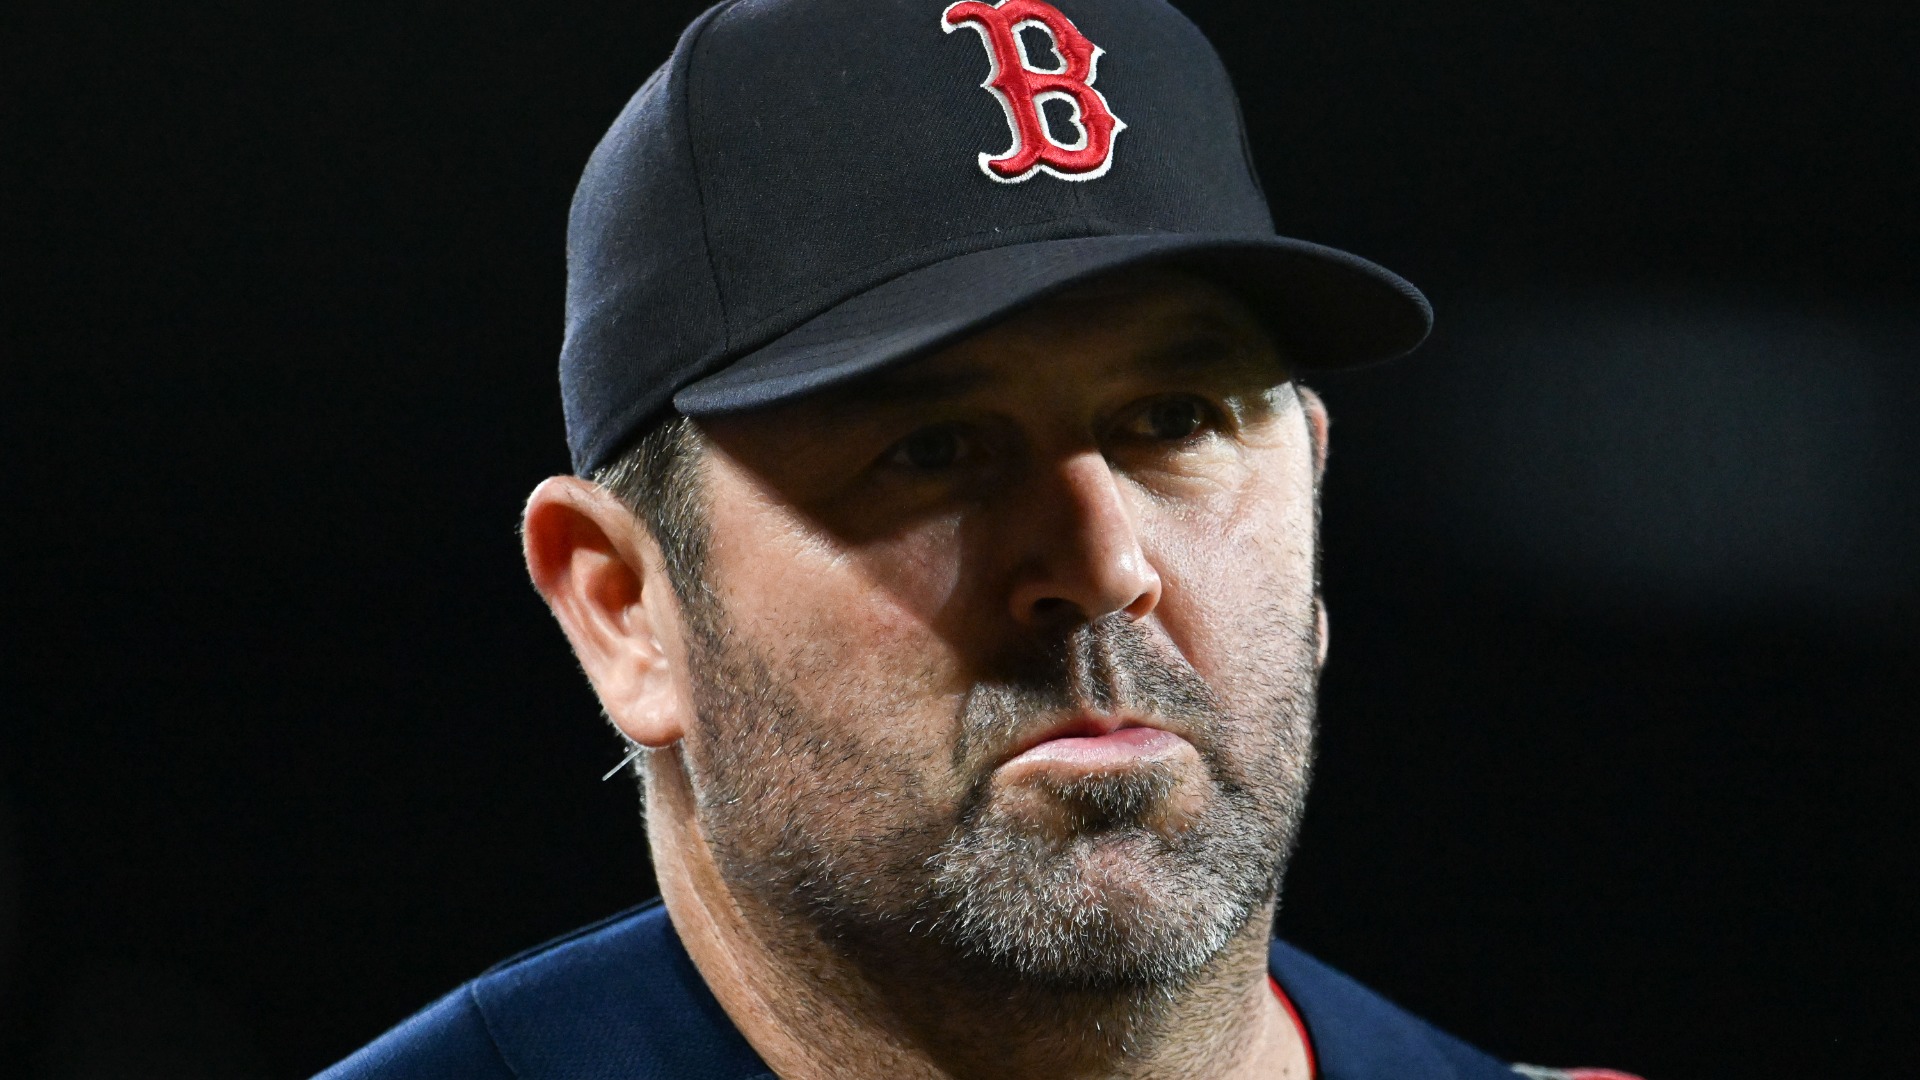 Tim Wakefield, Jason Varitek reluctantly say goodbye to Boston Red Sox